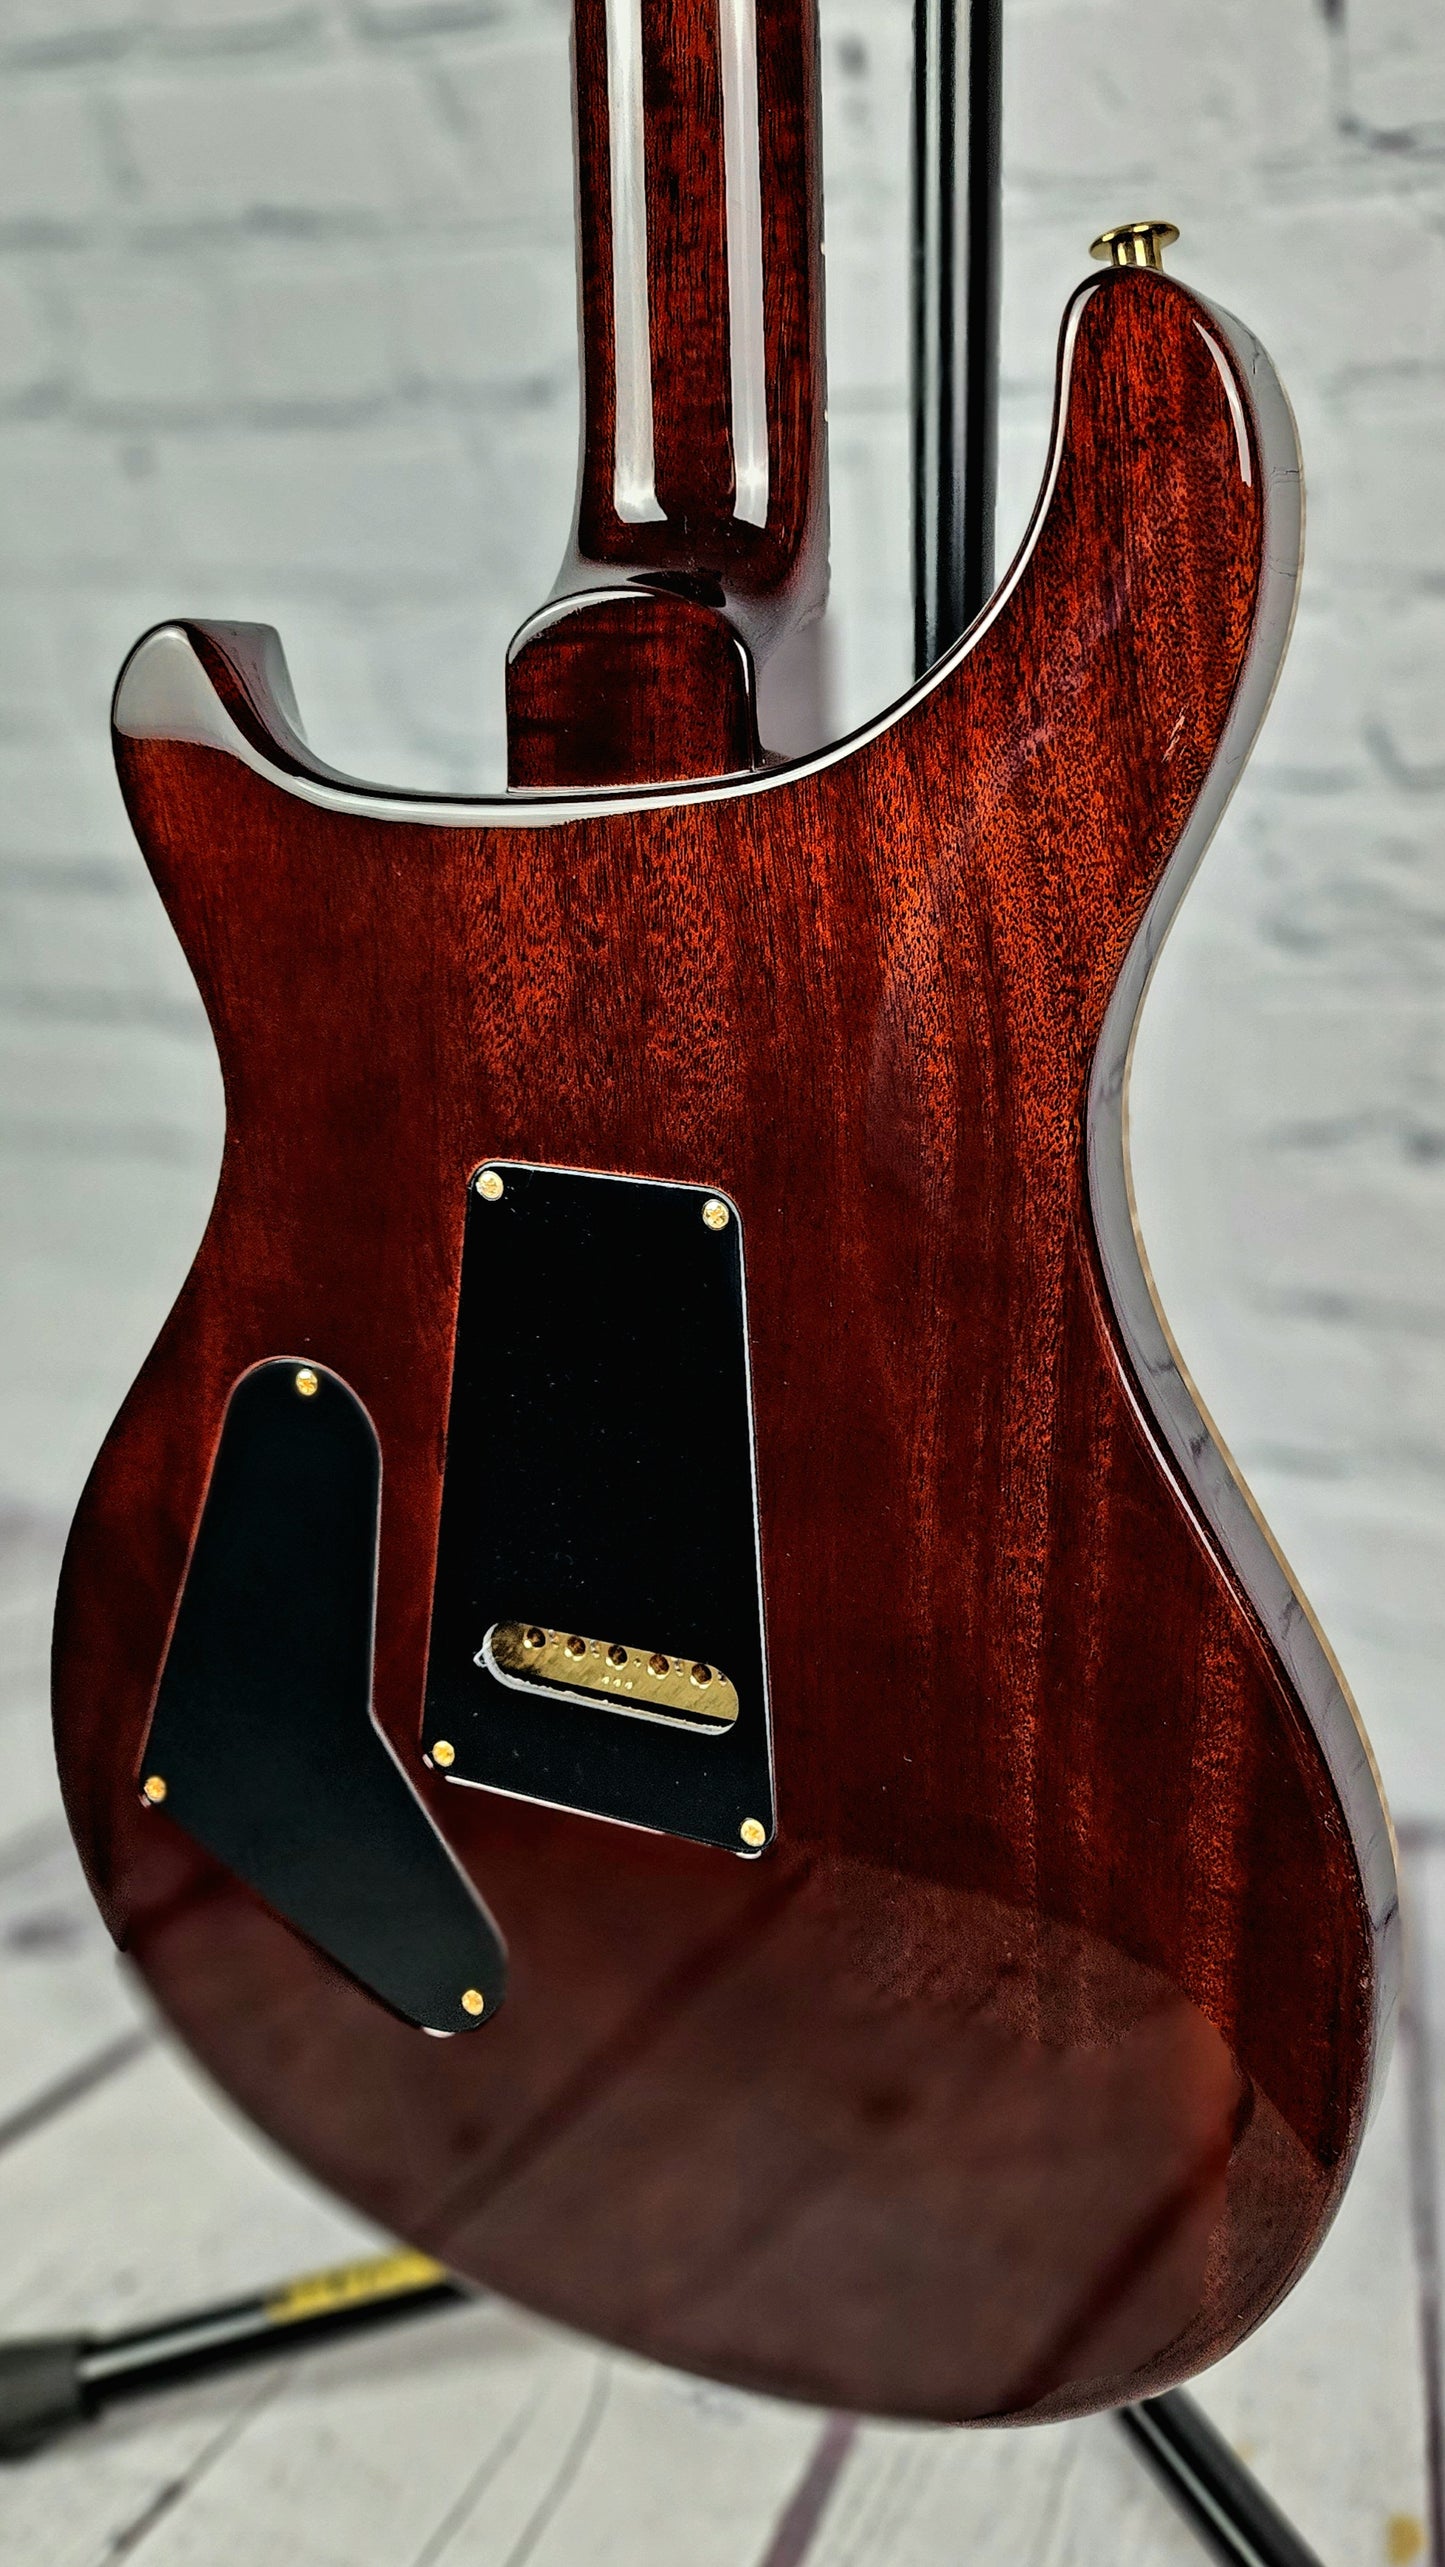 Paul Reed Smith PRS Custom 24 Core 10 Top Electric Guitar Orange Tiger